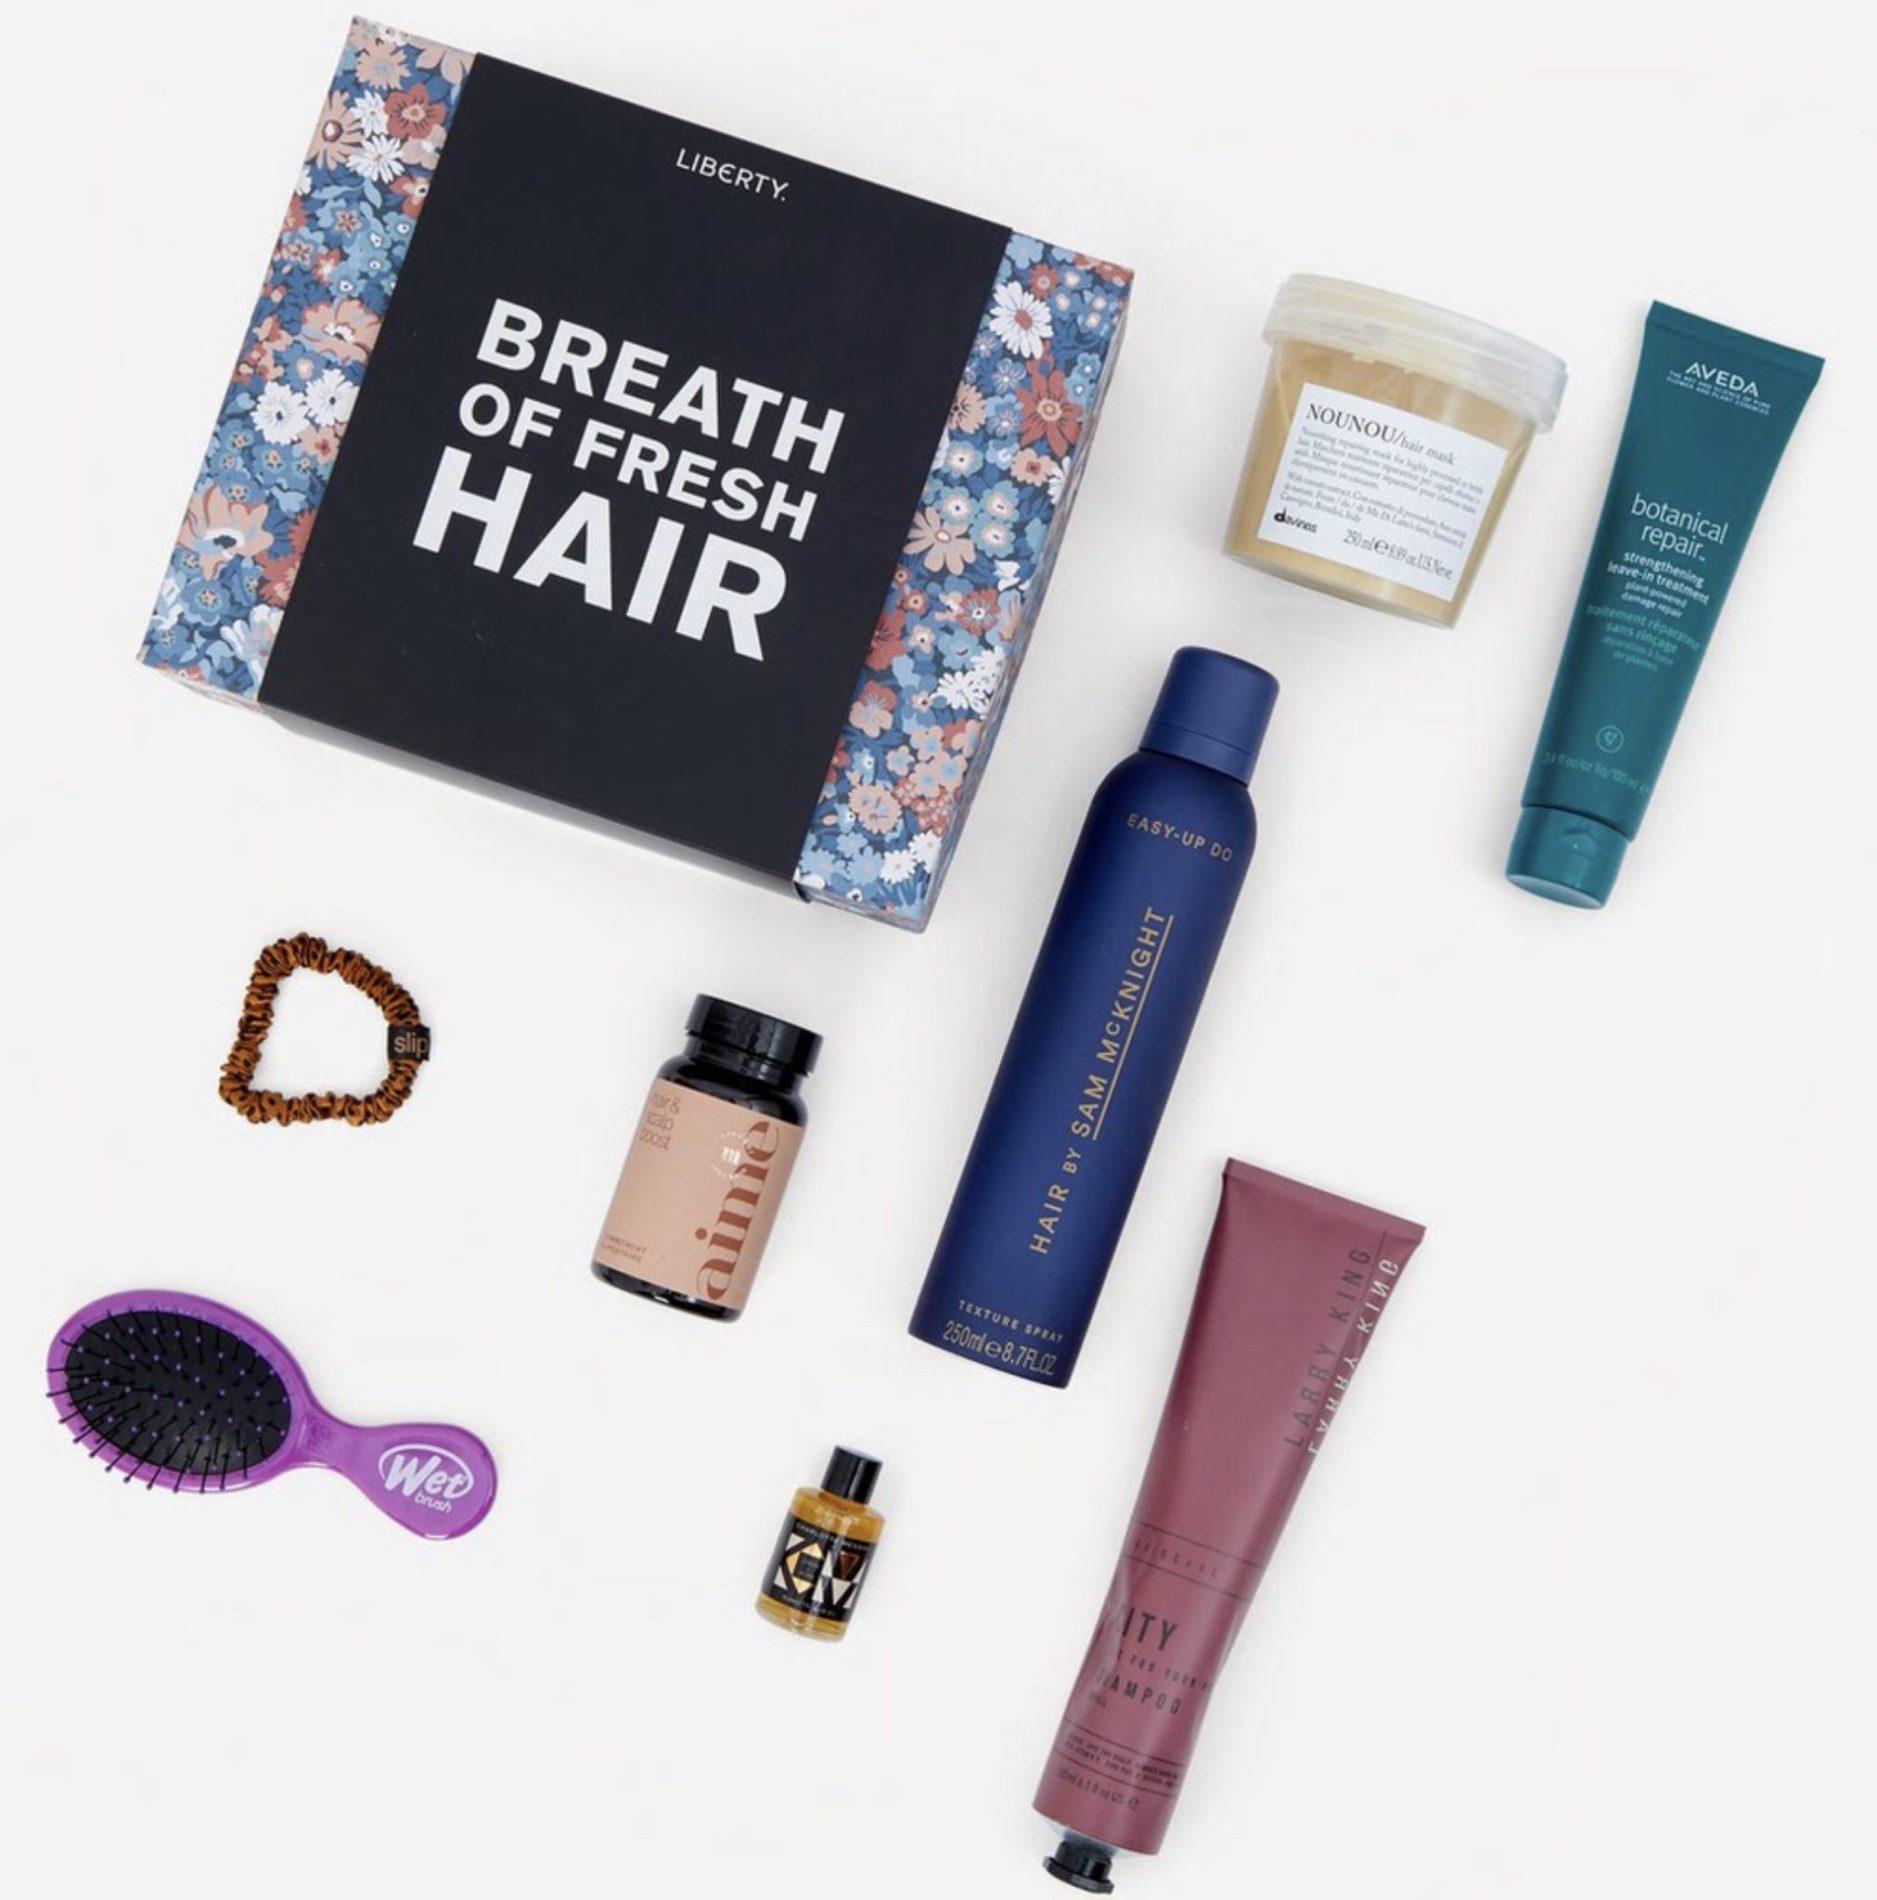 Liberty London “Breath of Fresh Hair” Beauty Kit – Now Available!